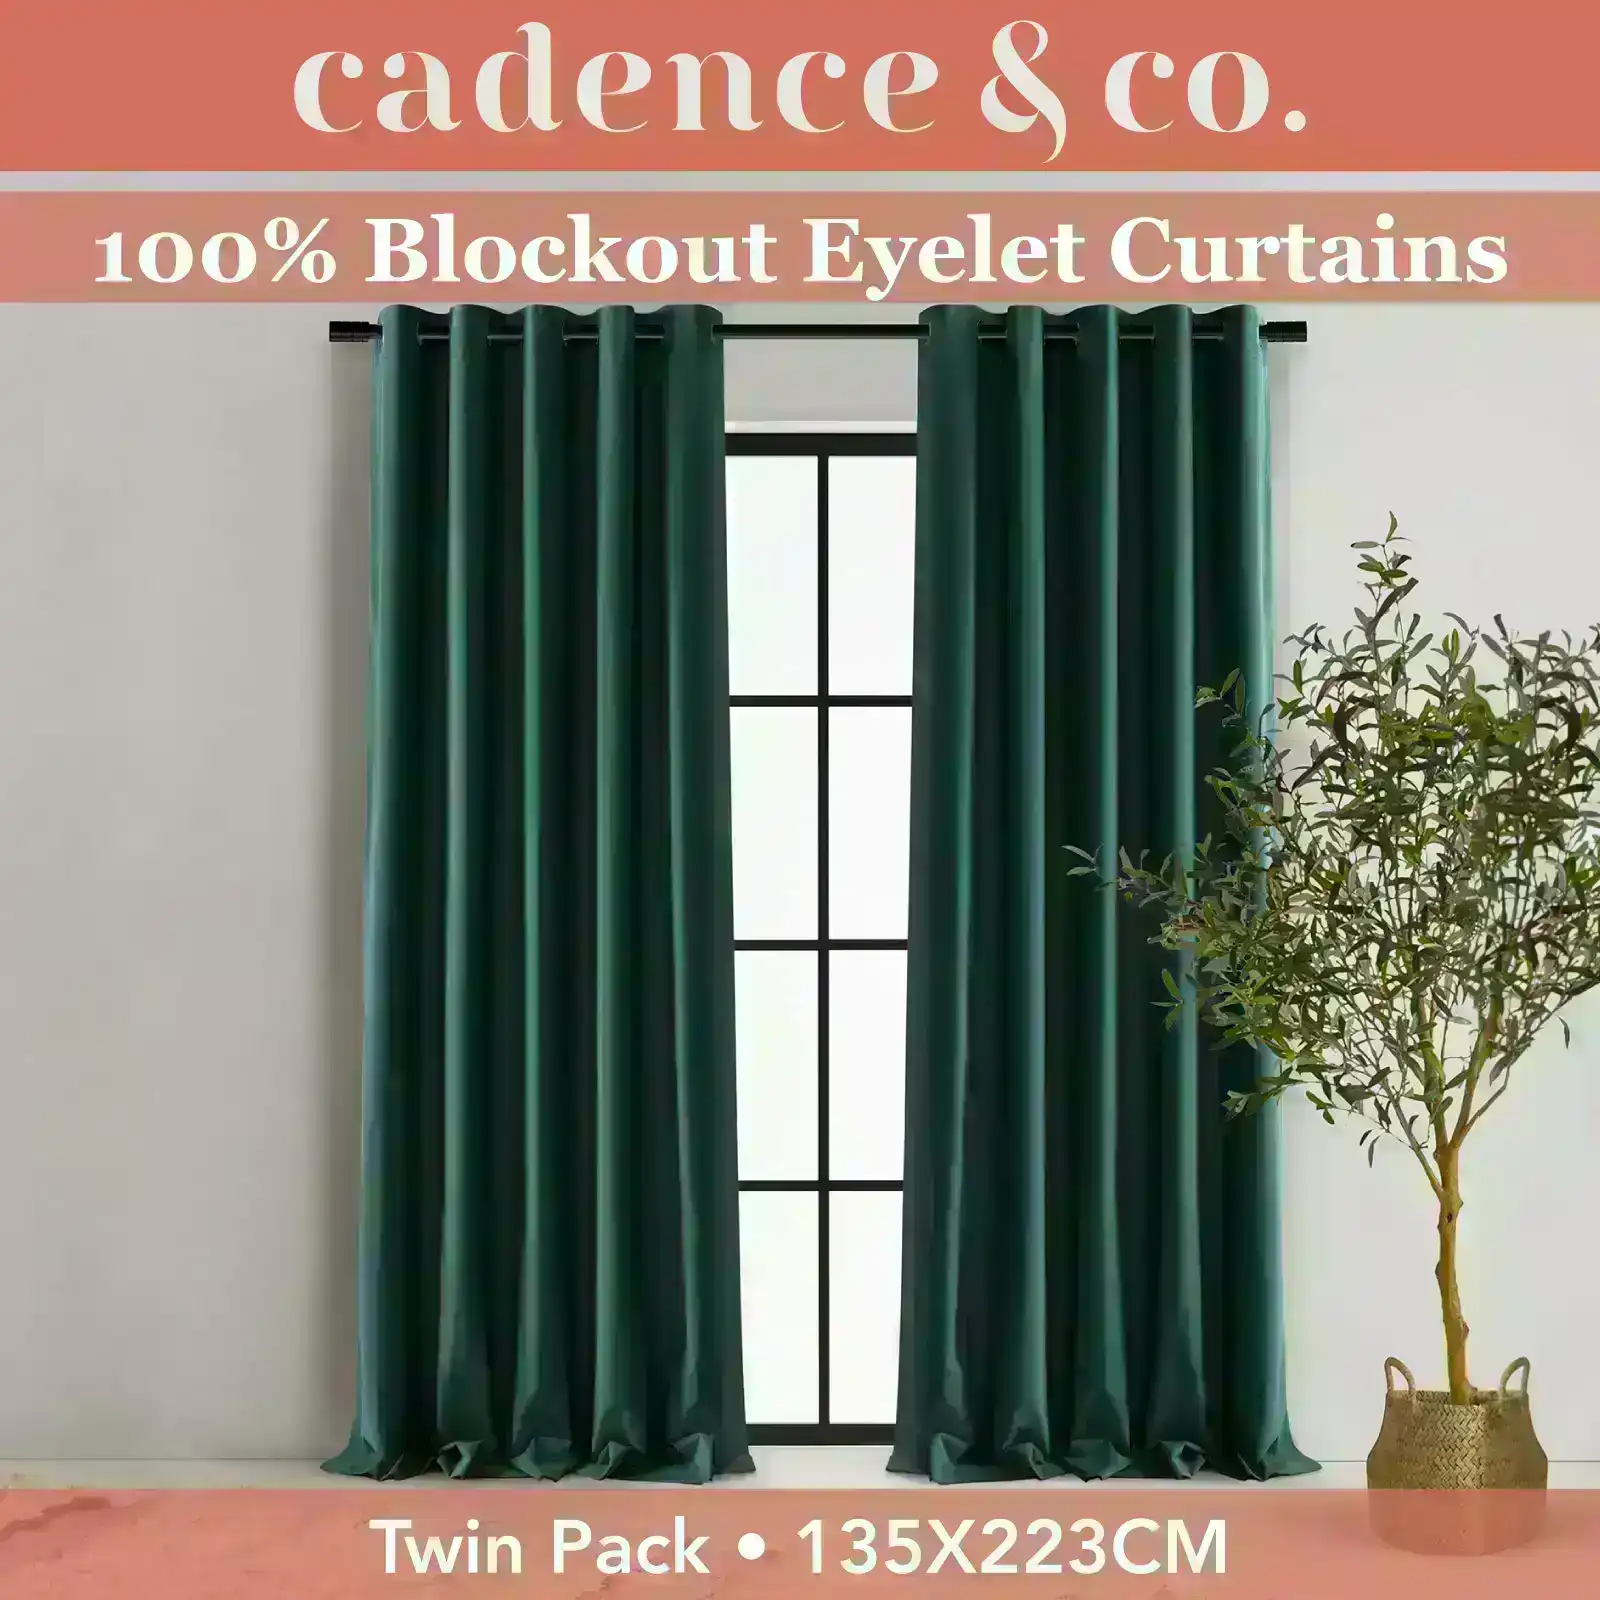 Cadence & Co Byron Matte Velvet 100% Blockout Eyelet Curtains Twin Pack Hunter Green 135x223cm